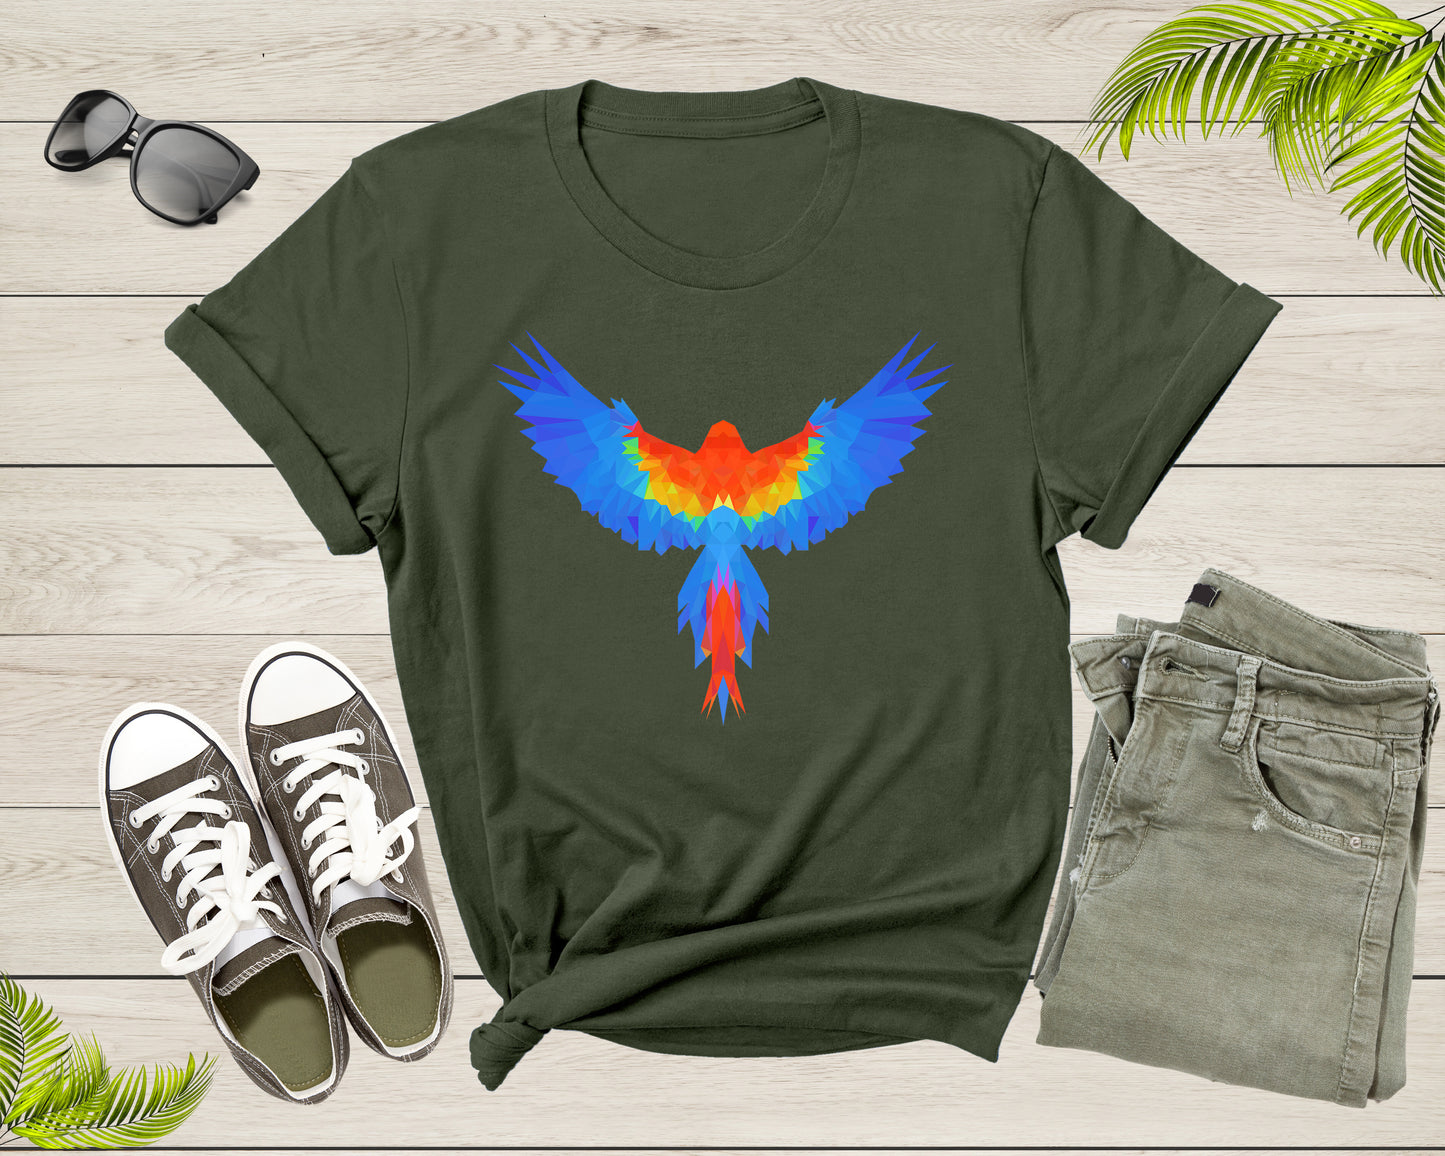 Cute Flying Colorful Parrot Topic Exotic Bird Art Design T-Shirt Parrot Lover Gift T Shirt for Men Women Kids Boys Girls Graphic Tshirt